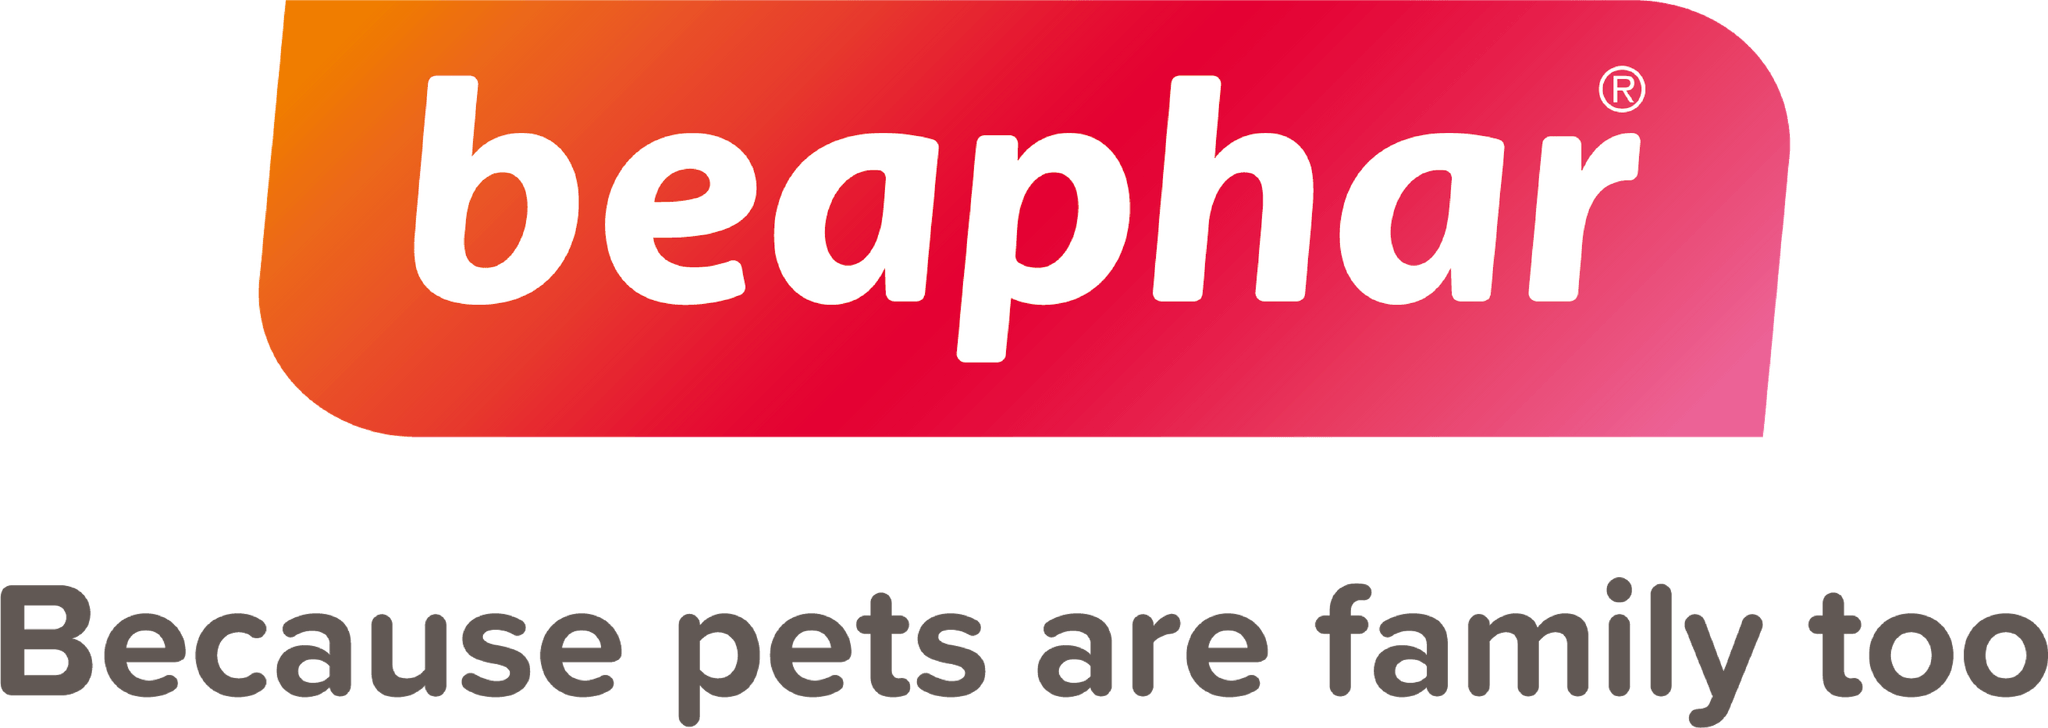 Beaphar logo with baseline